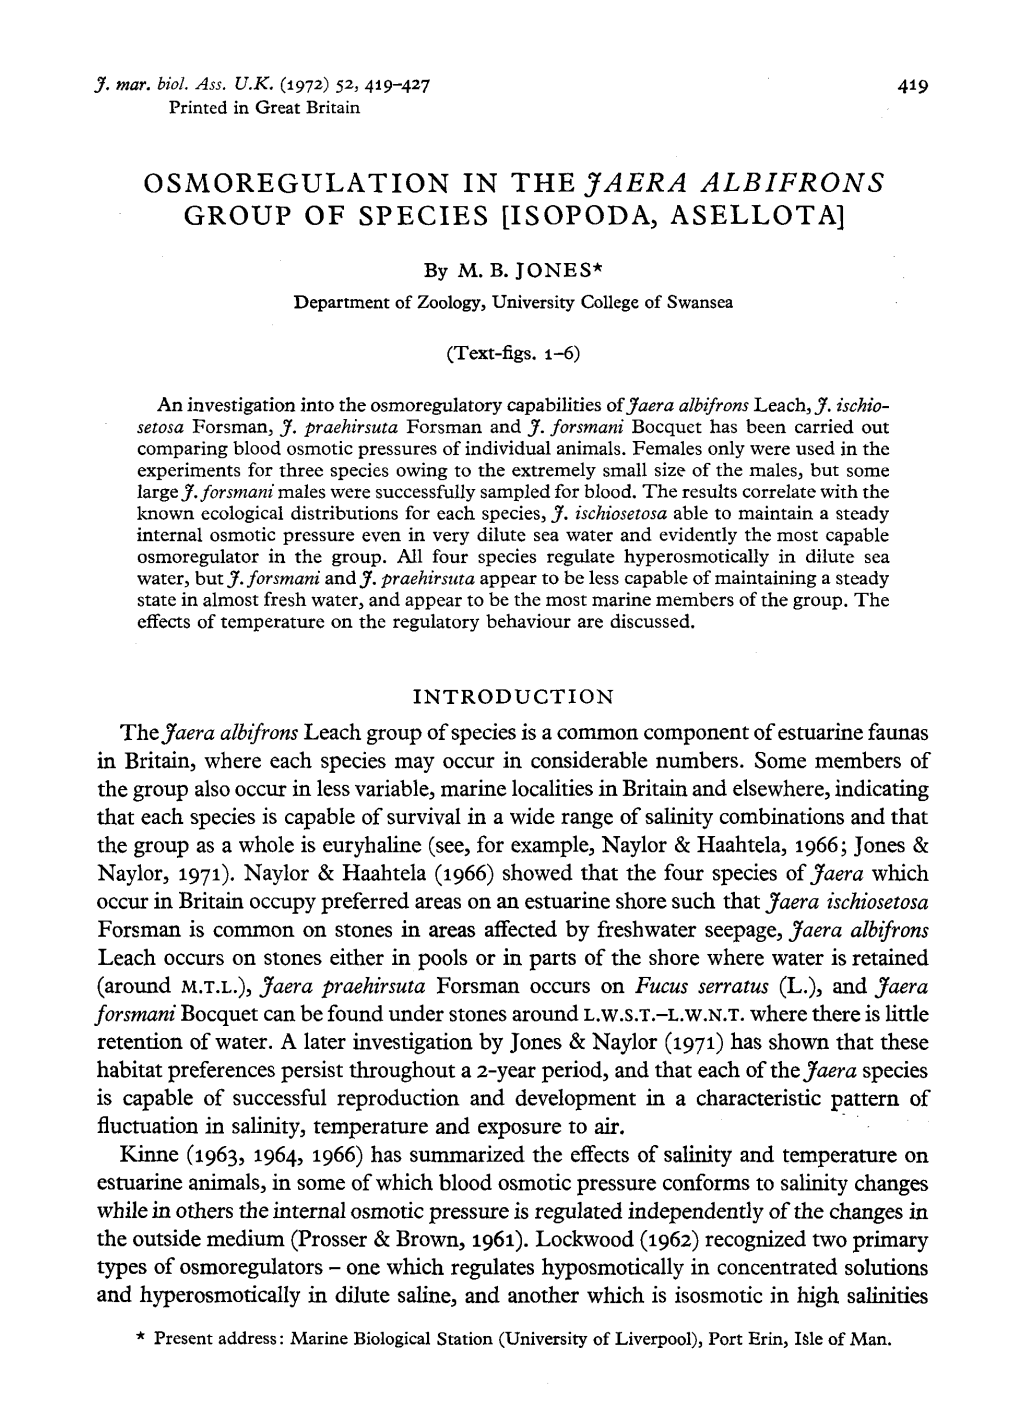 Osmoregulation in the Jaera Albifrons Group of Species [Isopoda, Asellota]